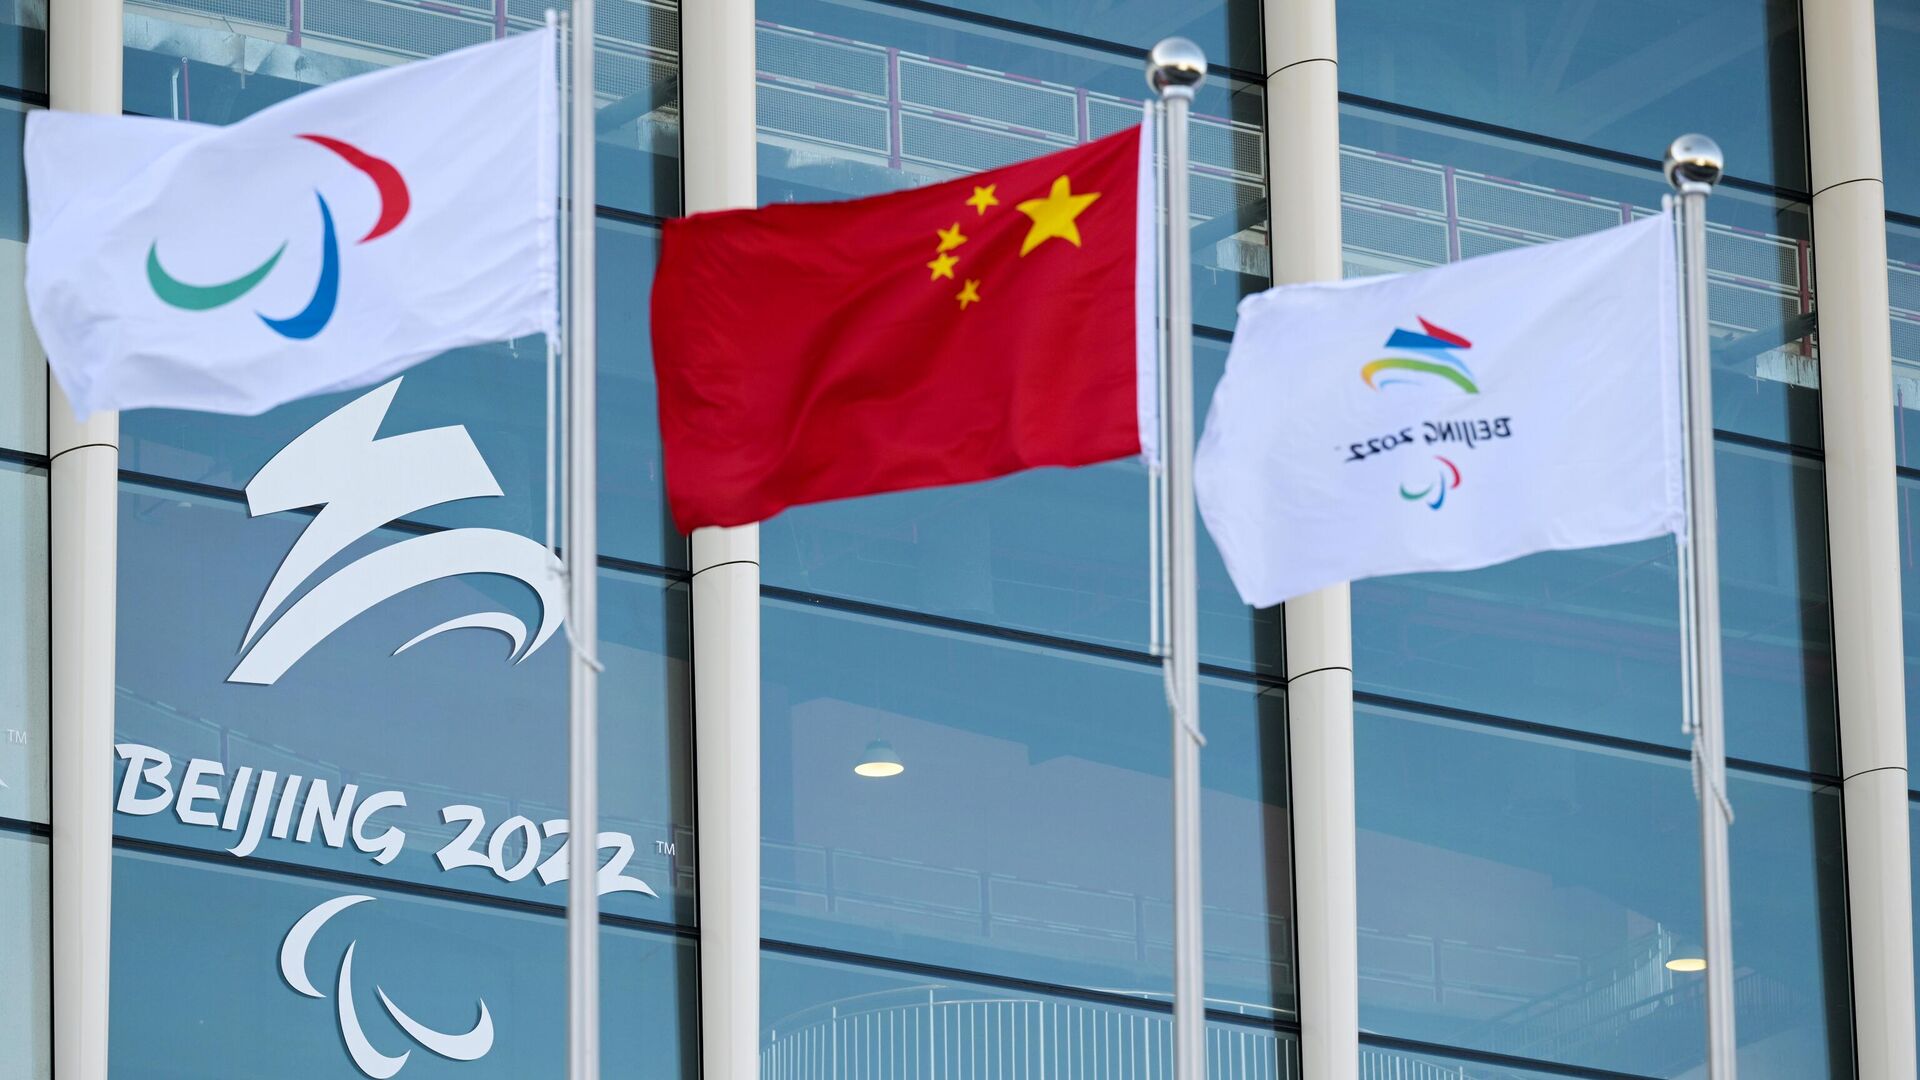 Флаги Паралимпийского движения, Китая и XXIV Олимпийских игр у медиацентра в Пекине - Sputnik Грузия, 1920, 13.03.2022